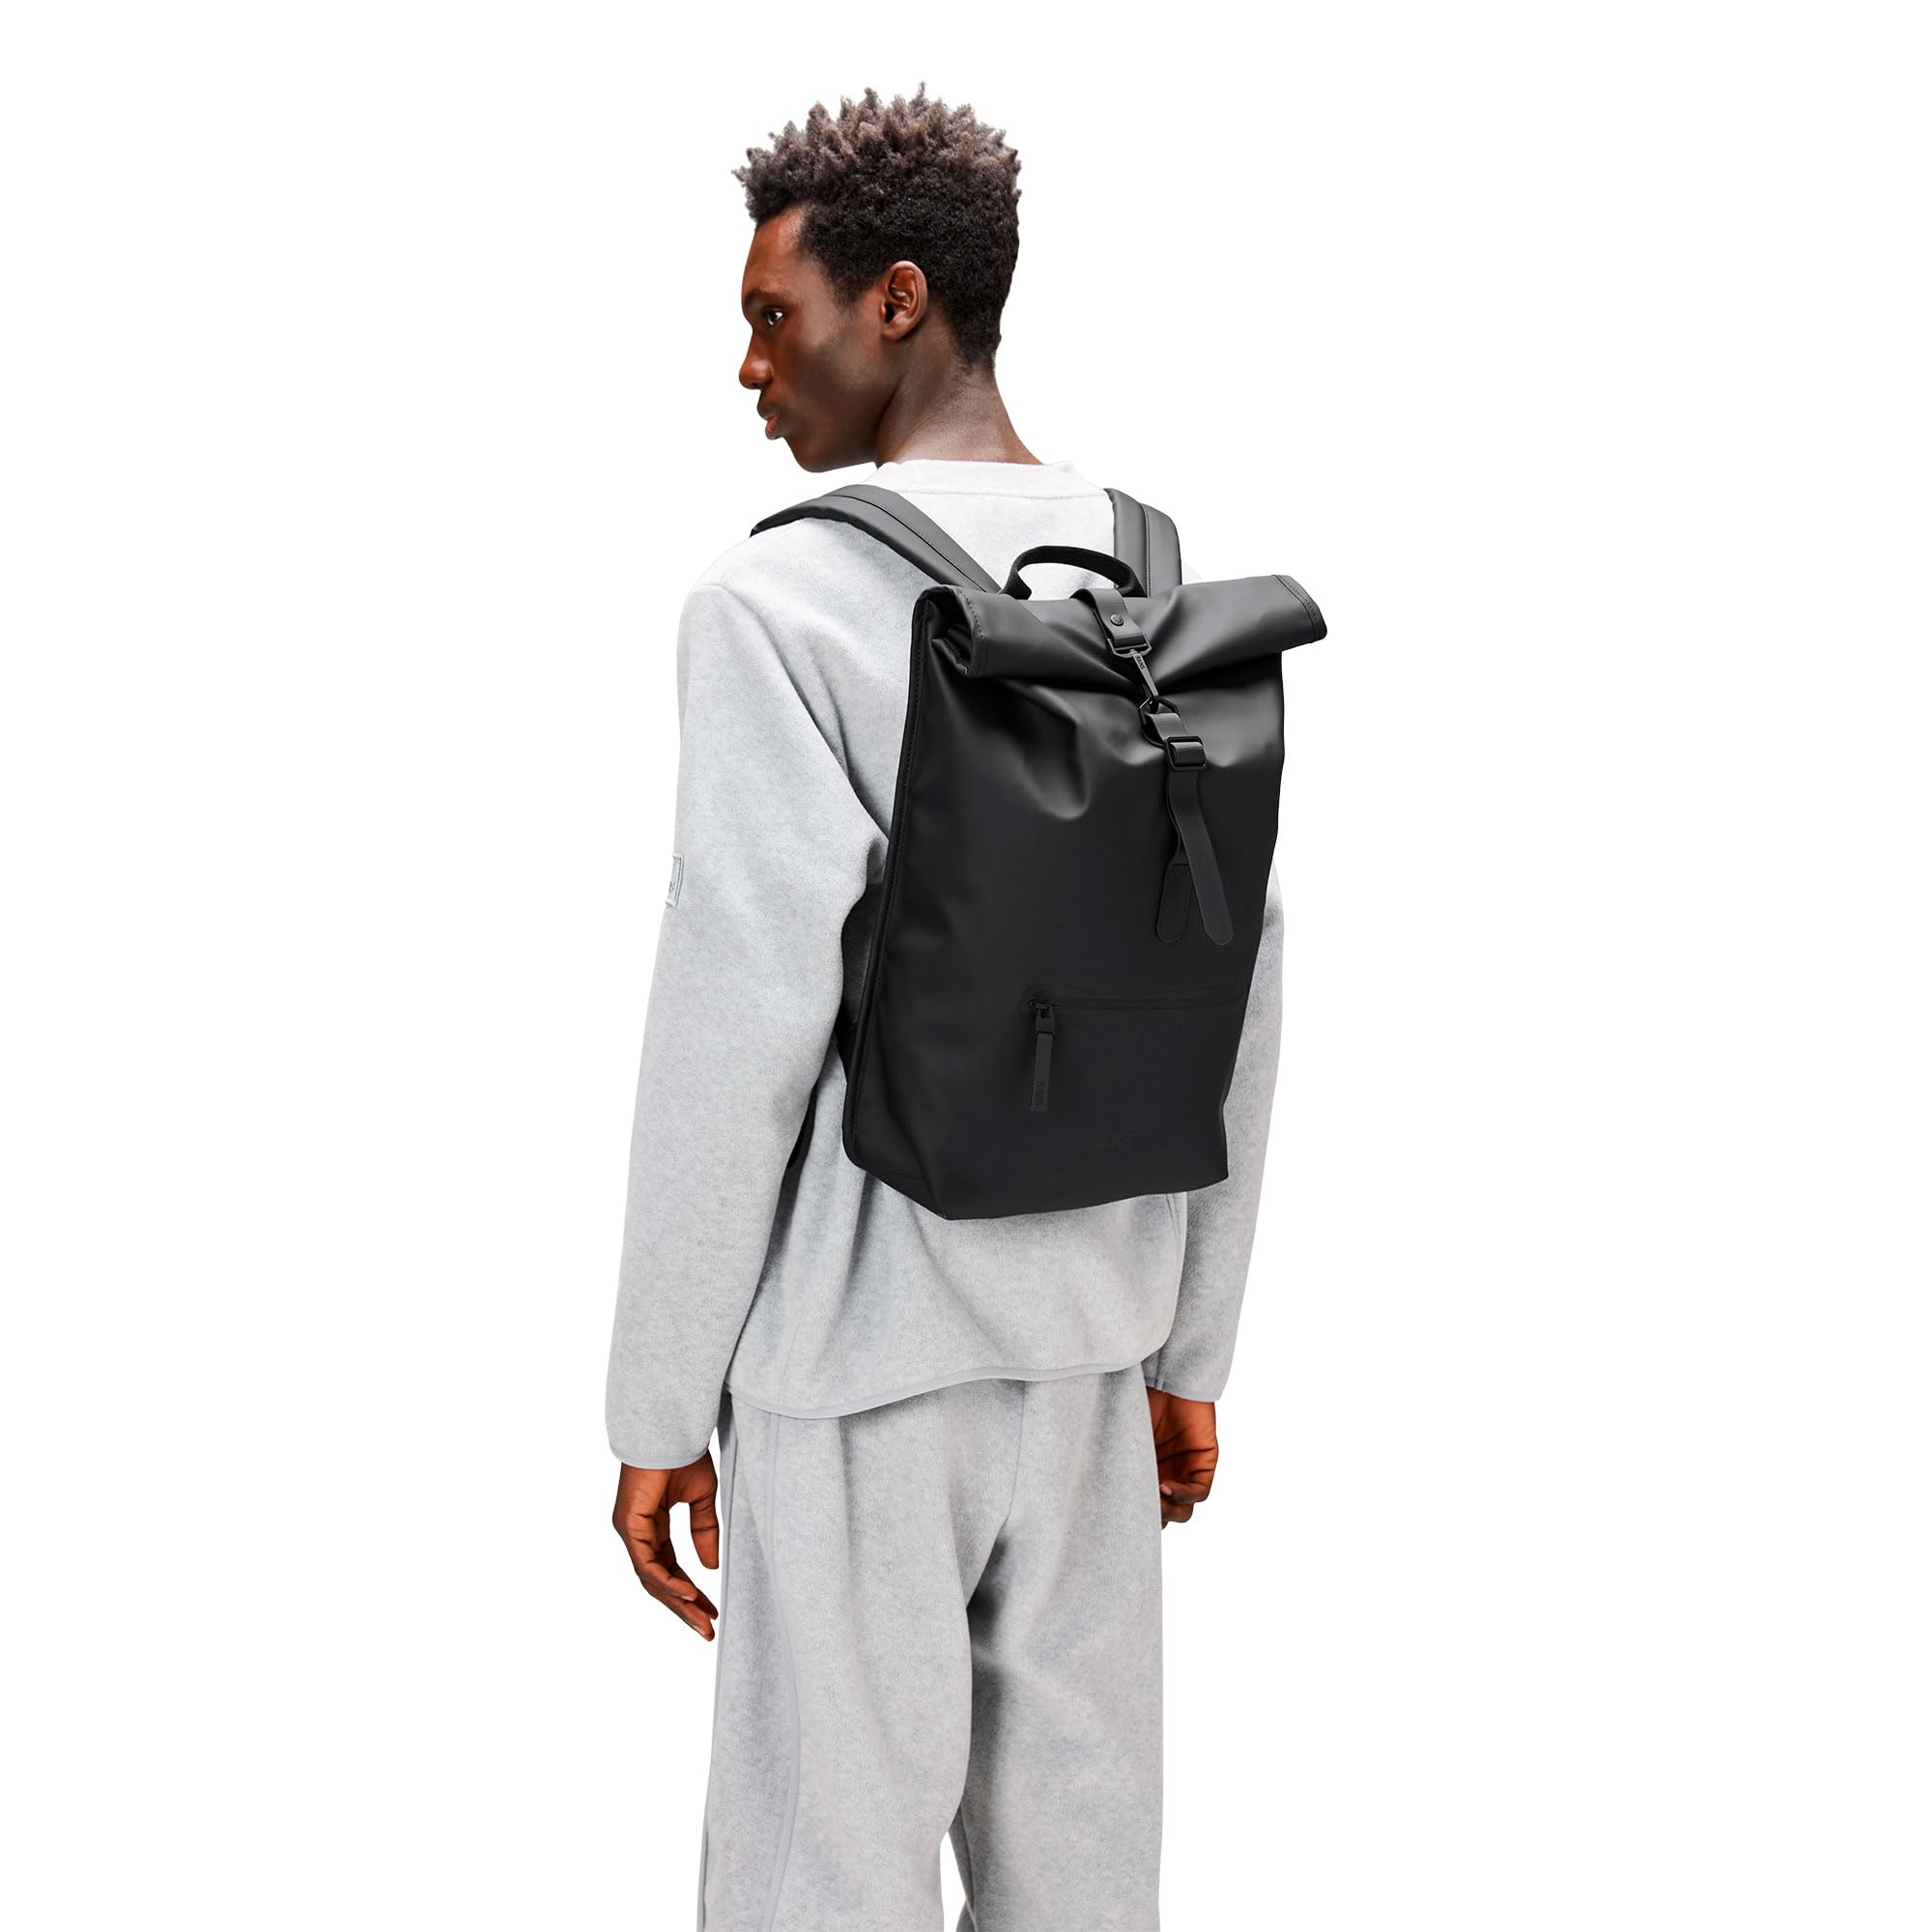 RAINS Rolltop Rucksack -Backpack - Waterproof Backpack for Women and Men - Rucksack for Travel and Work (Black)